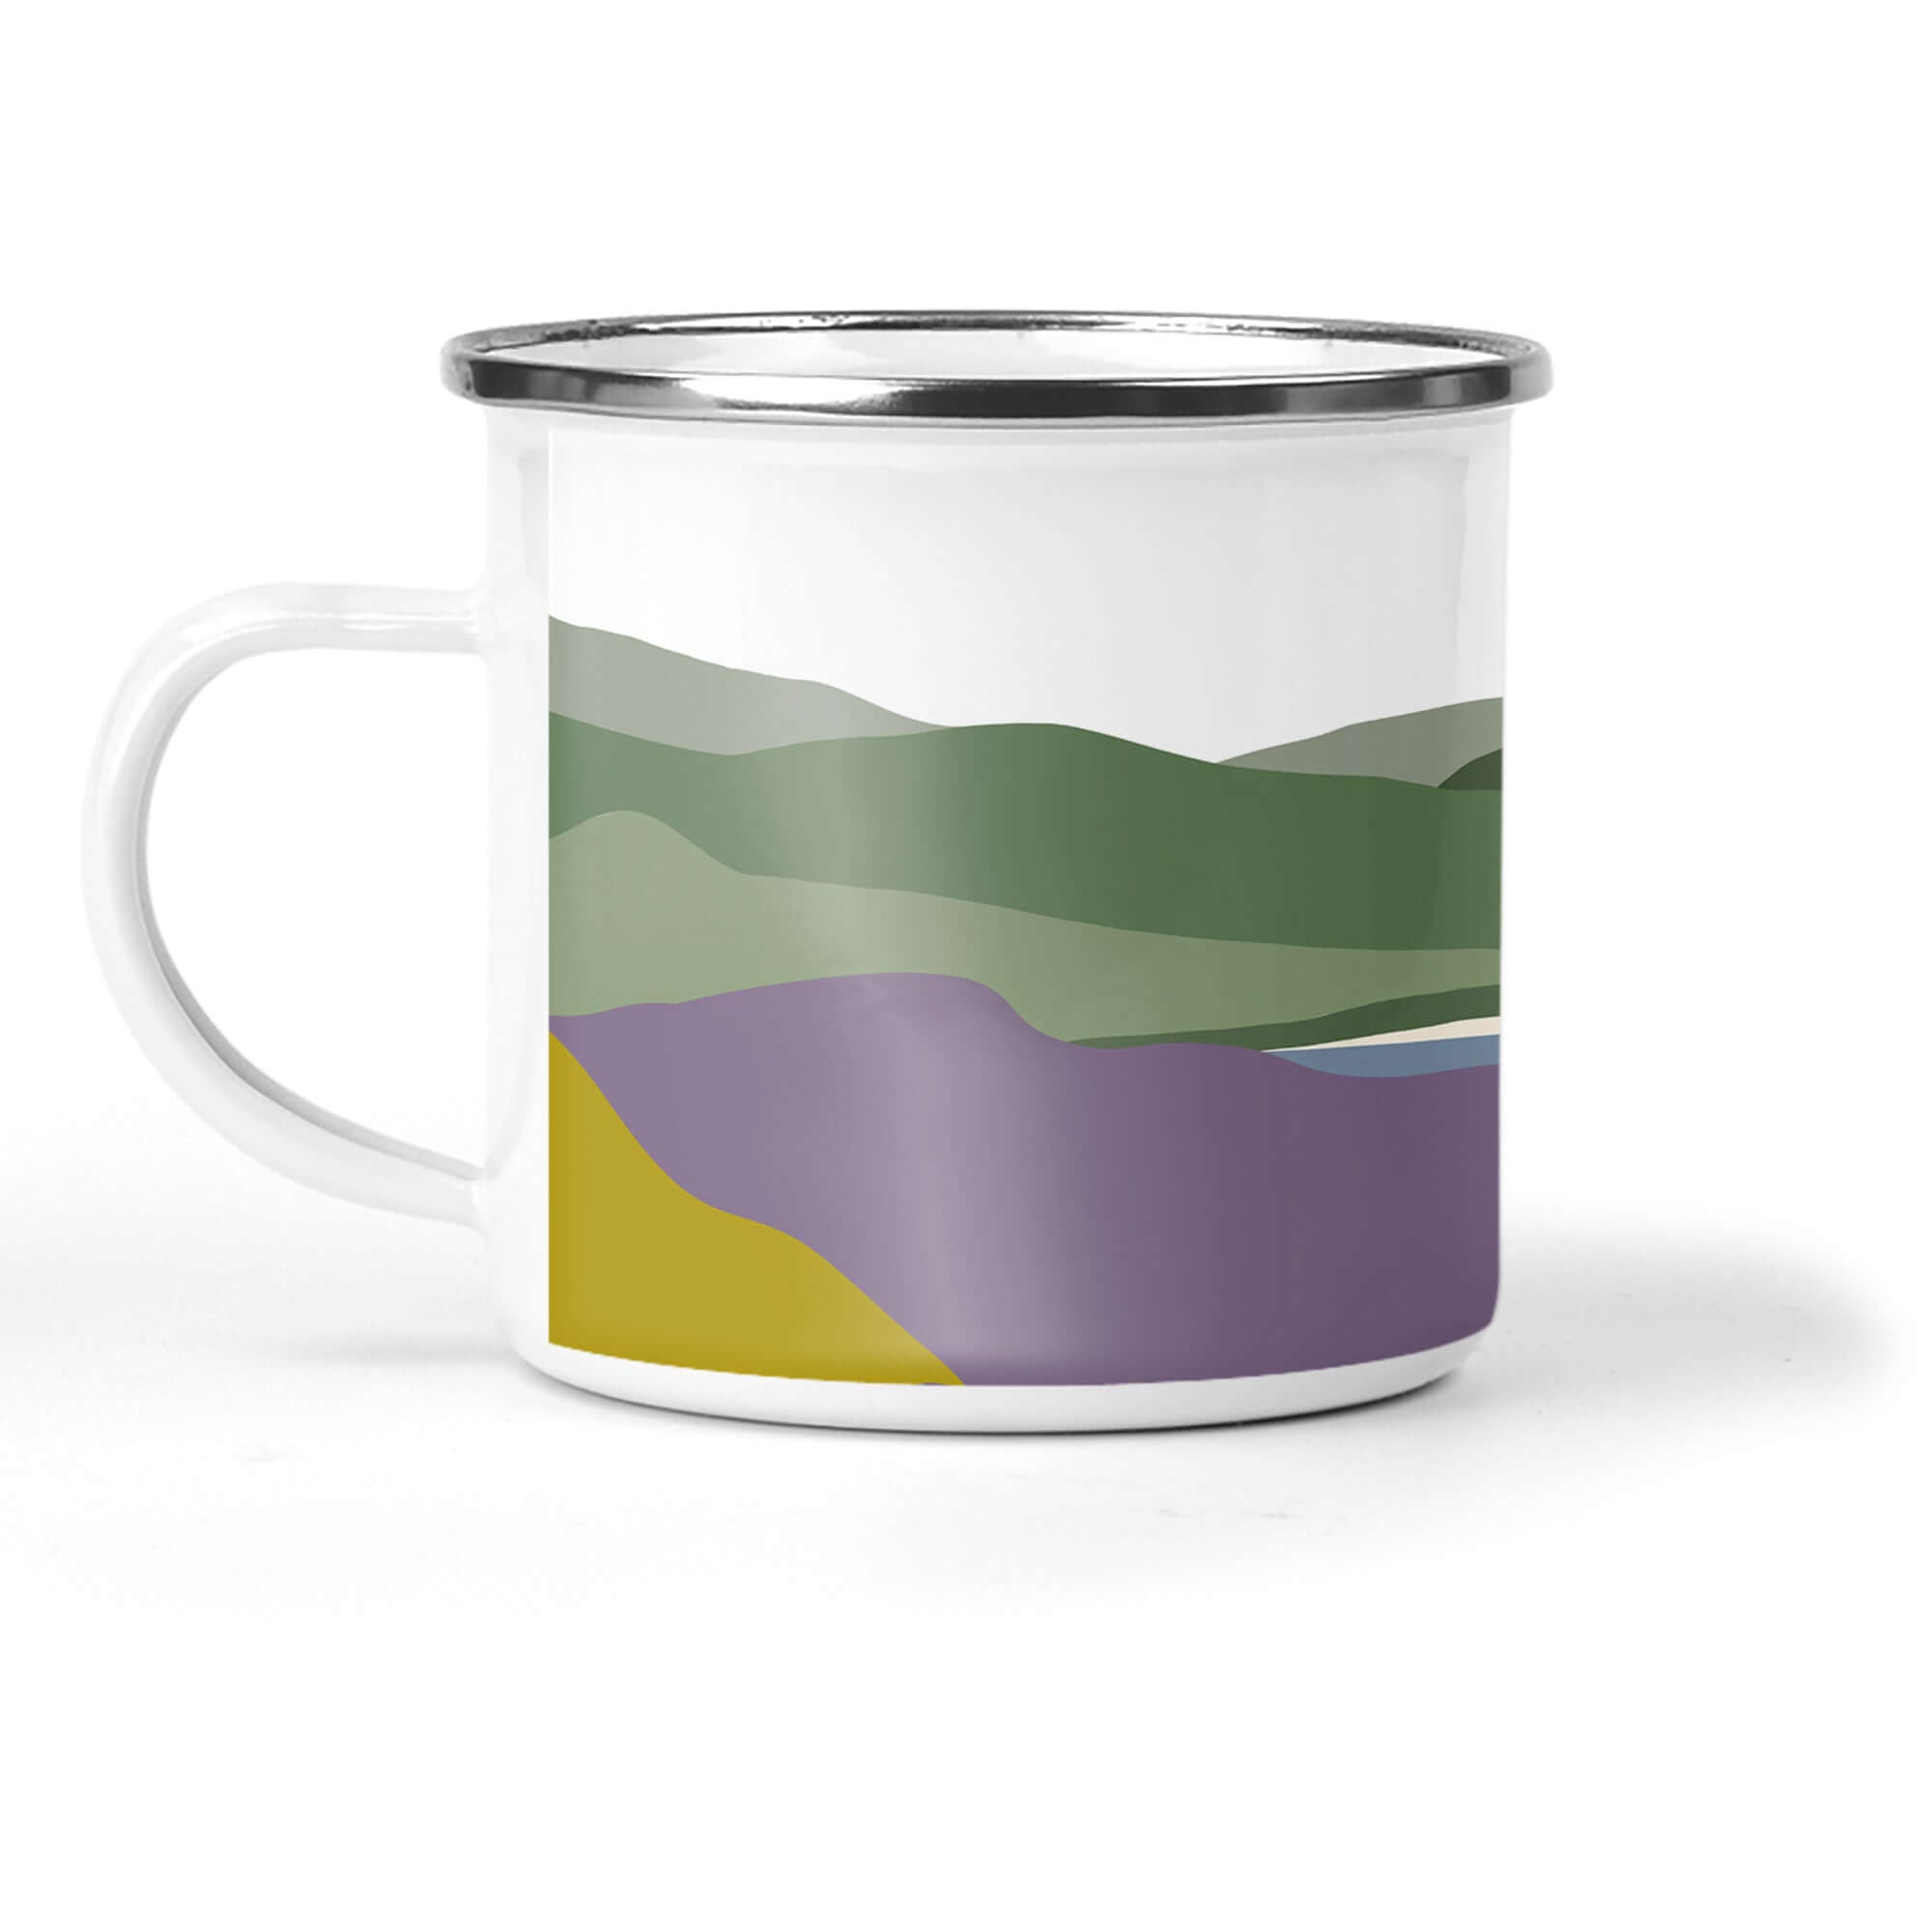 Welsh Hills "Heather and Gorse" Enamel Metal Tin Cup Enamel Mug Mustard and Gray Ltd Shropshire UK